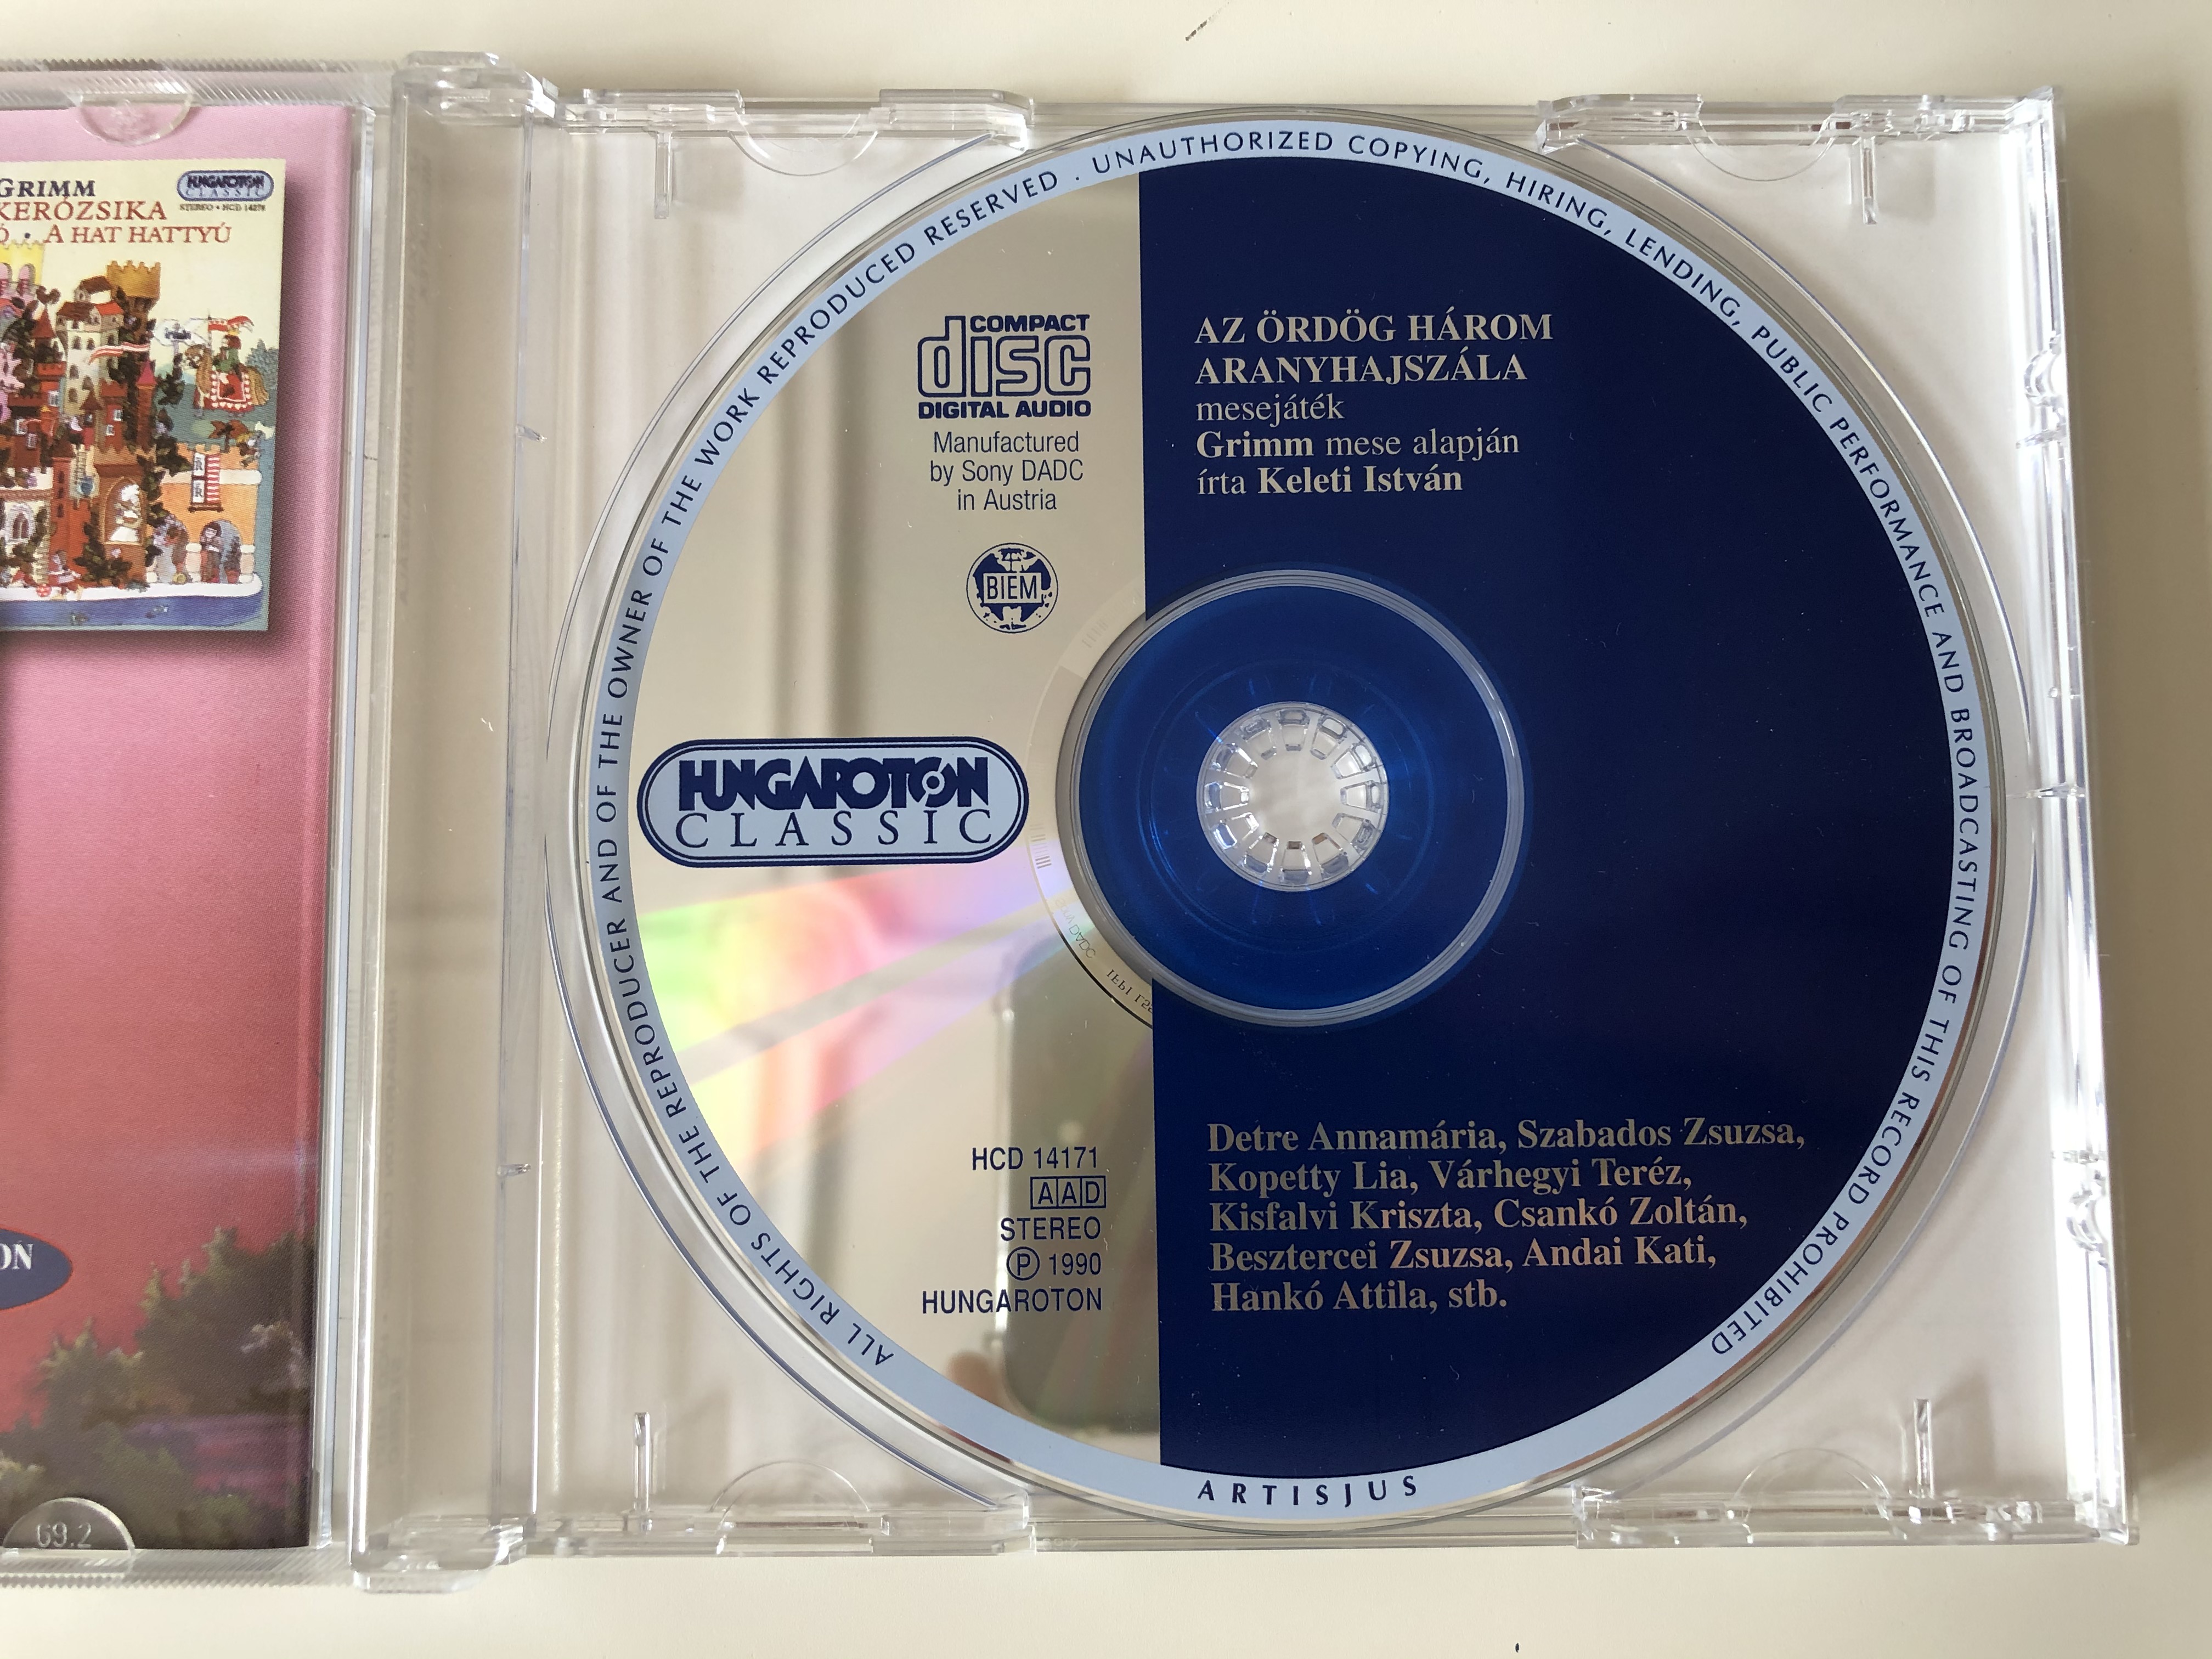 az-ordog-harom-aranyhajszala-mesejatek-hungaroton-classic-audio-cd-1990-stereo-hcd-14171-3-.jpg